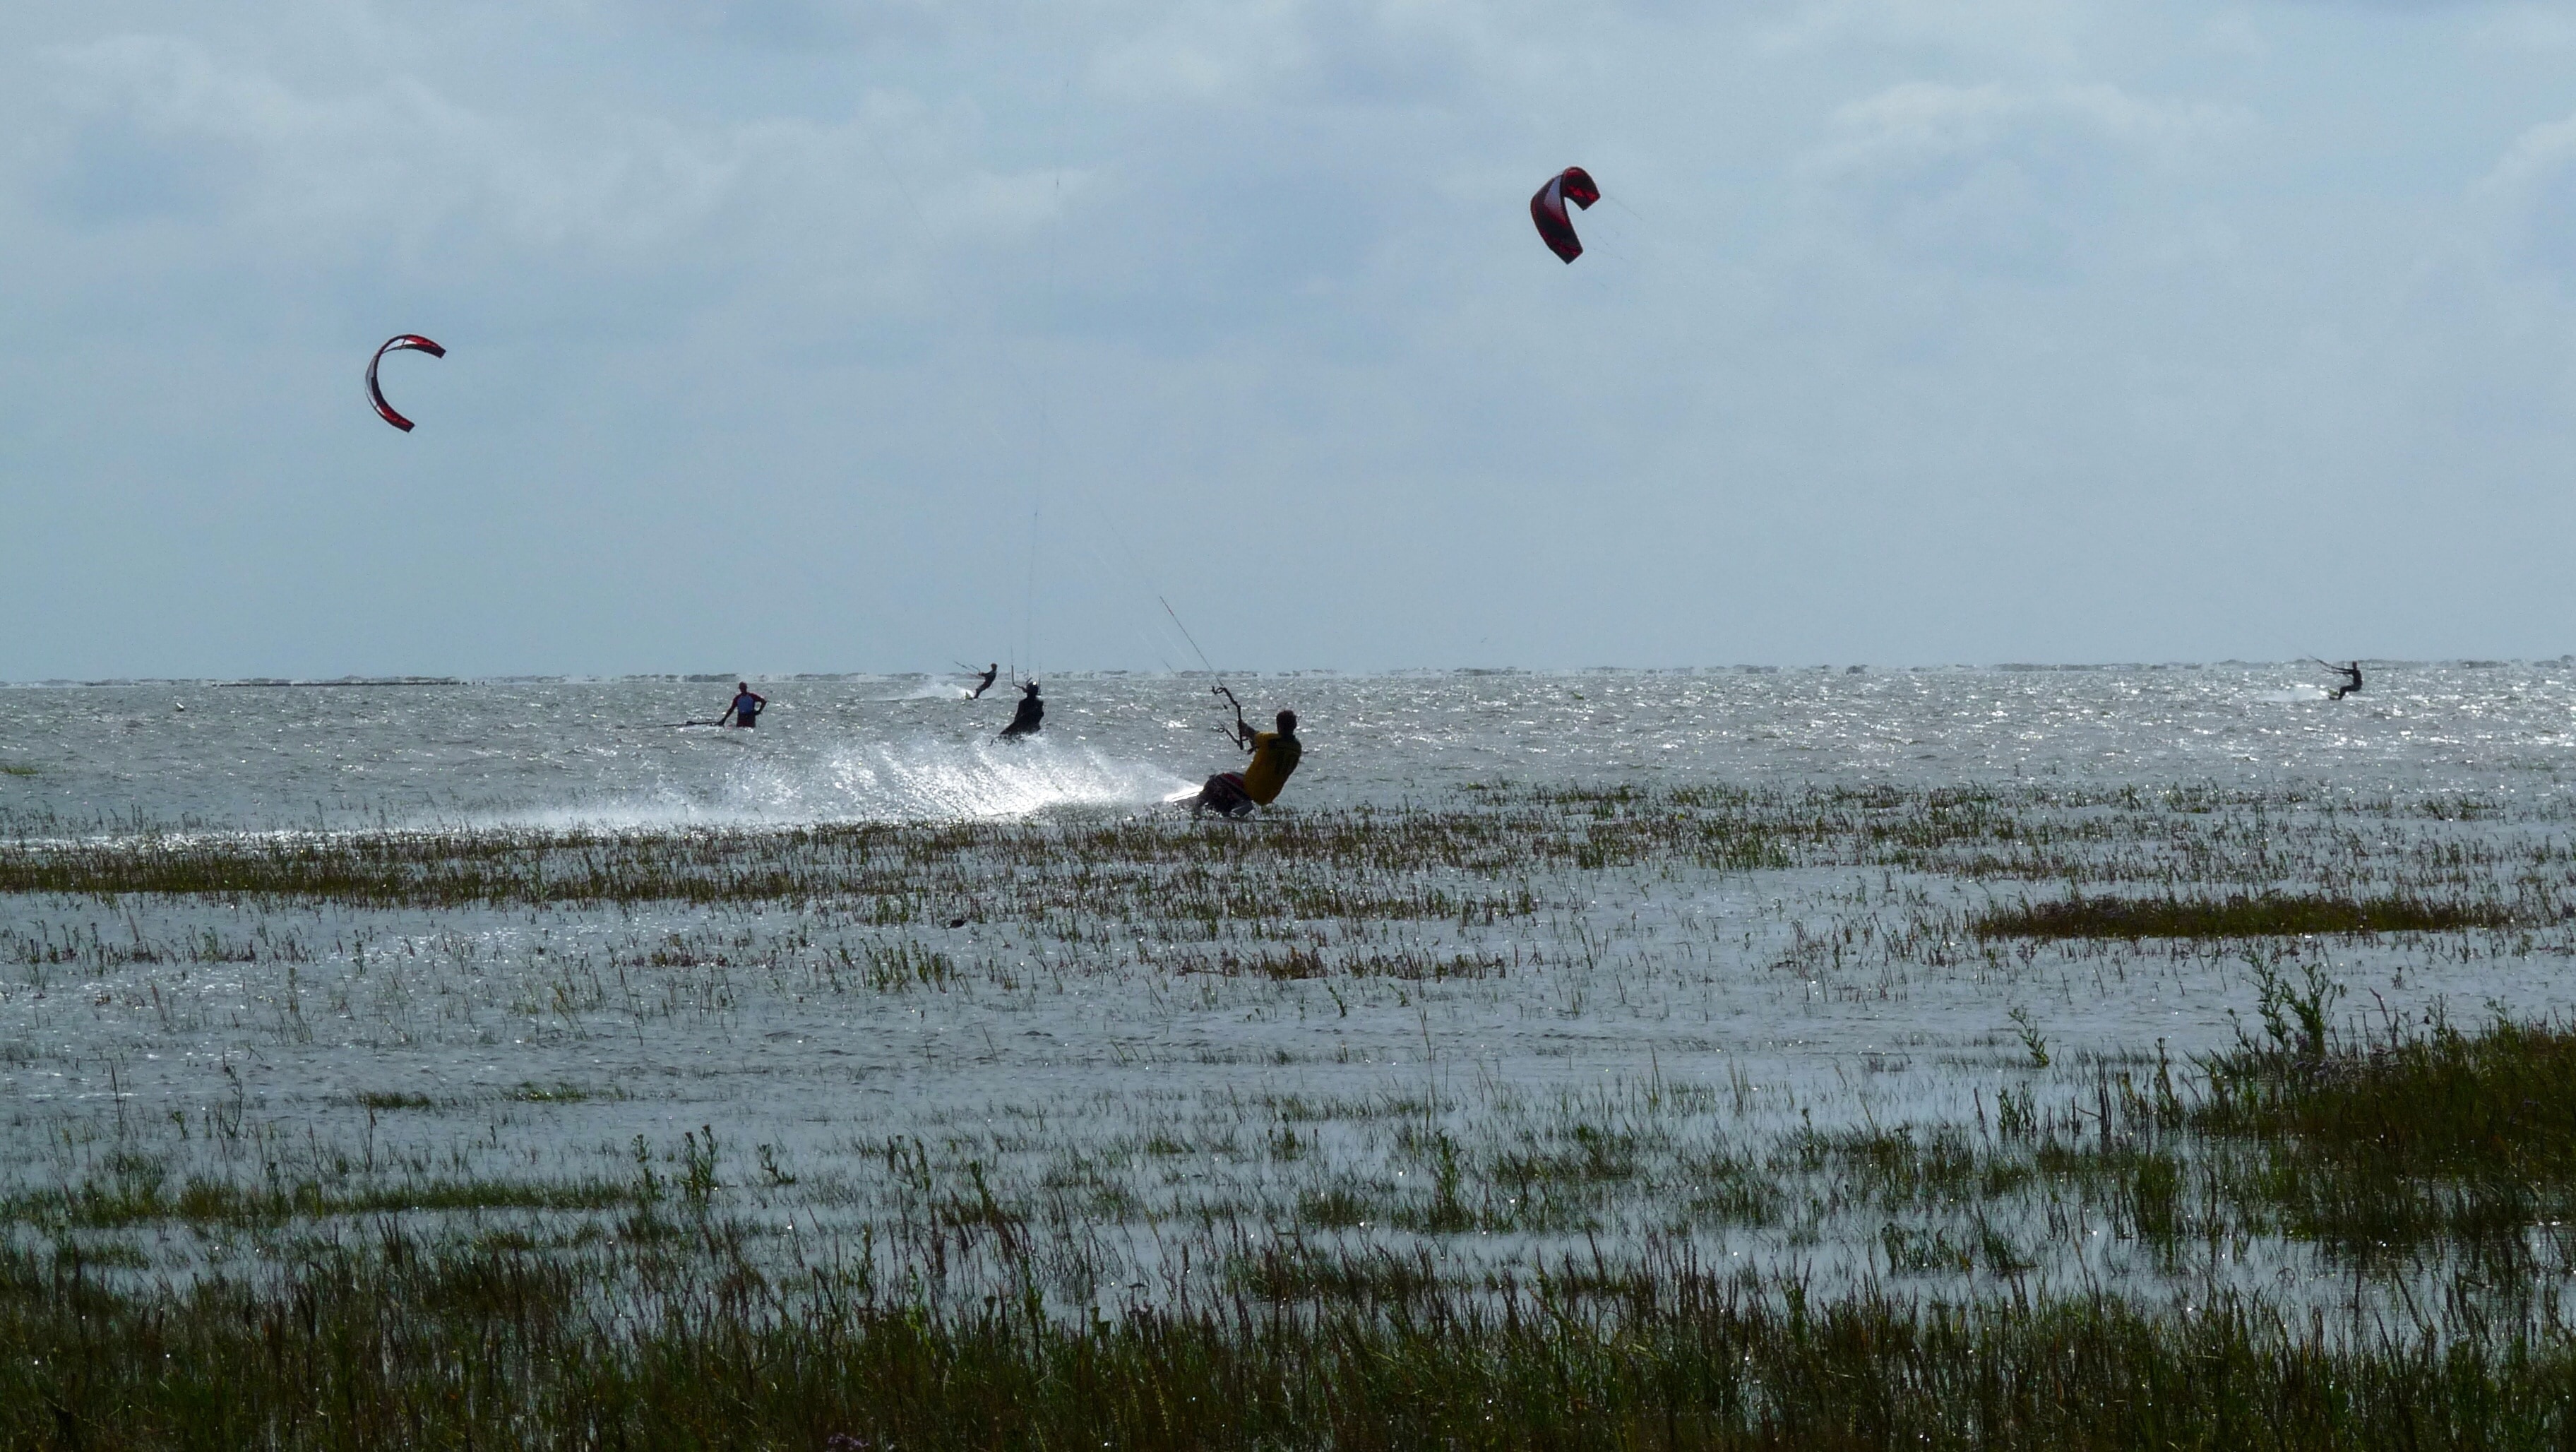 people kite surfing during dayt ime